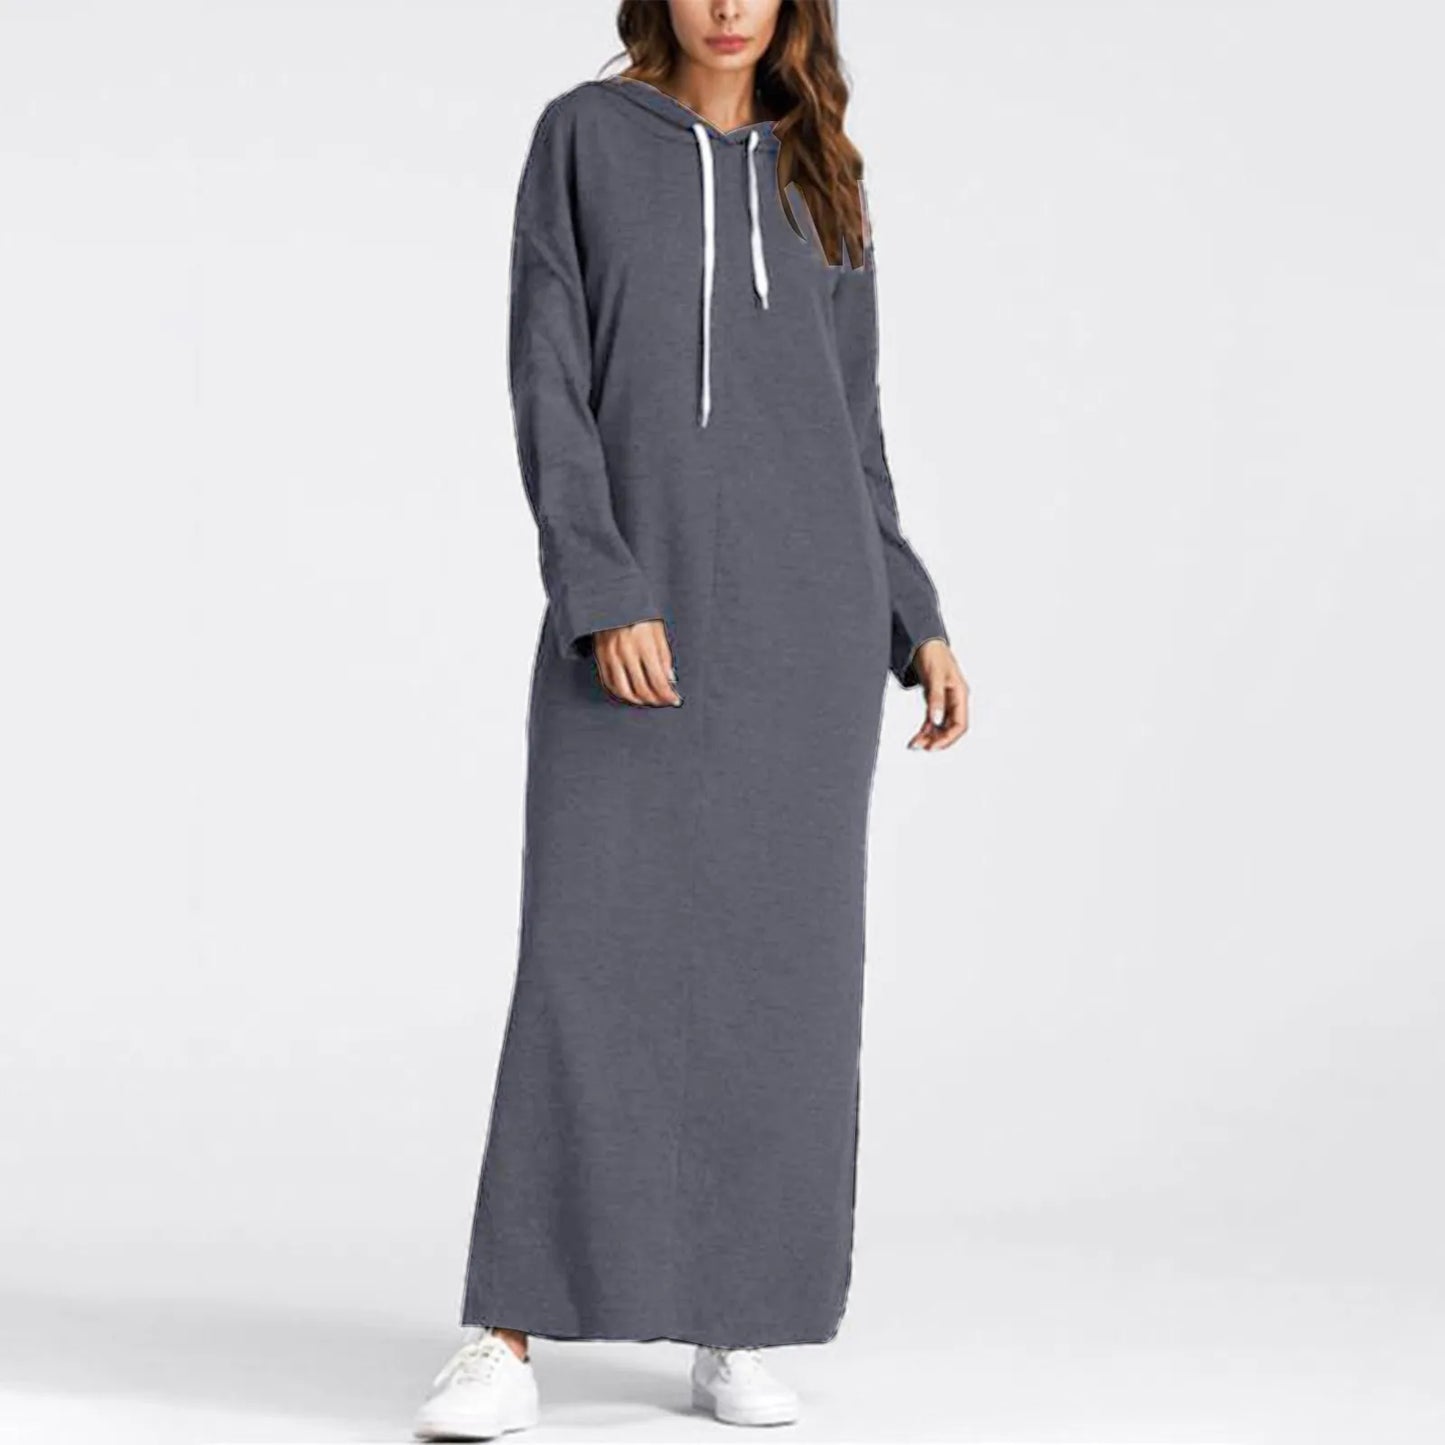 JuliaFashion - Women Maxi Casual Solid Color Drawstring Long Hooded With Pockets Autumn Long Sleeve Hoodies Sweatshirt Dress